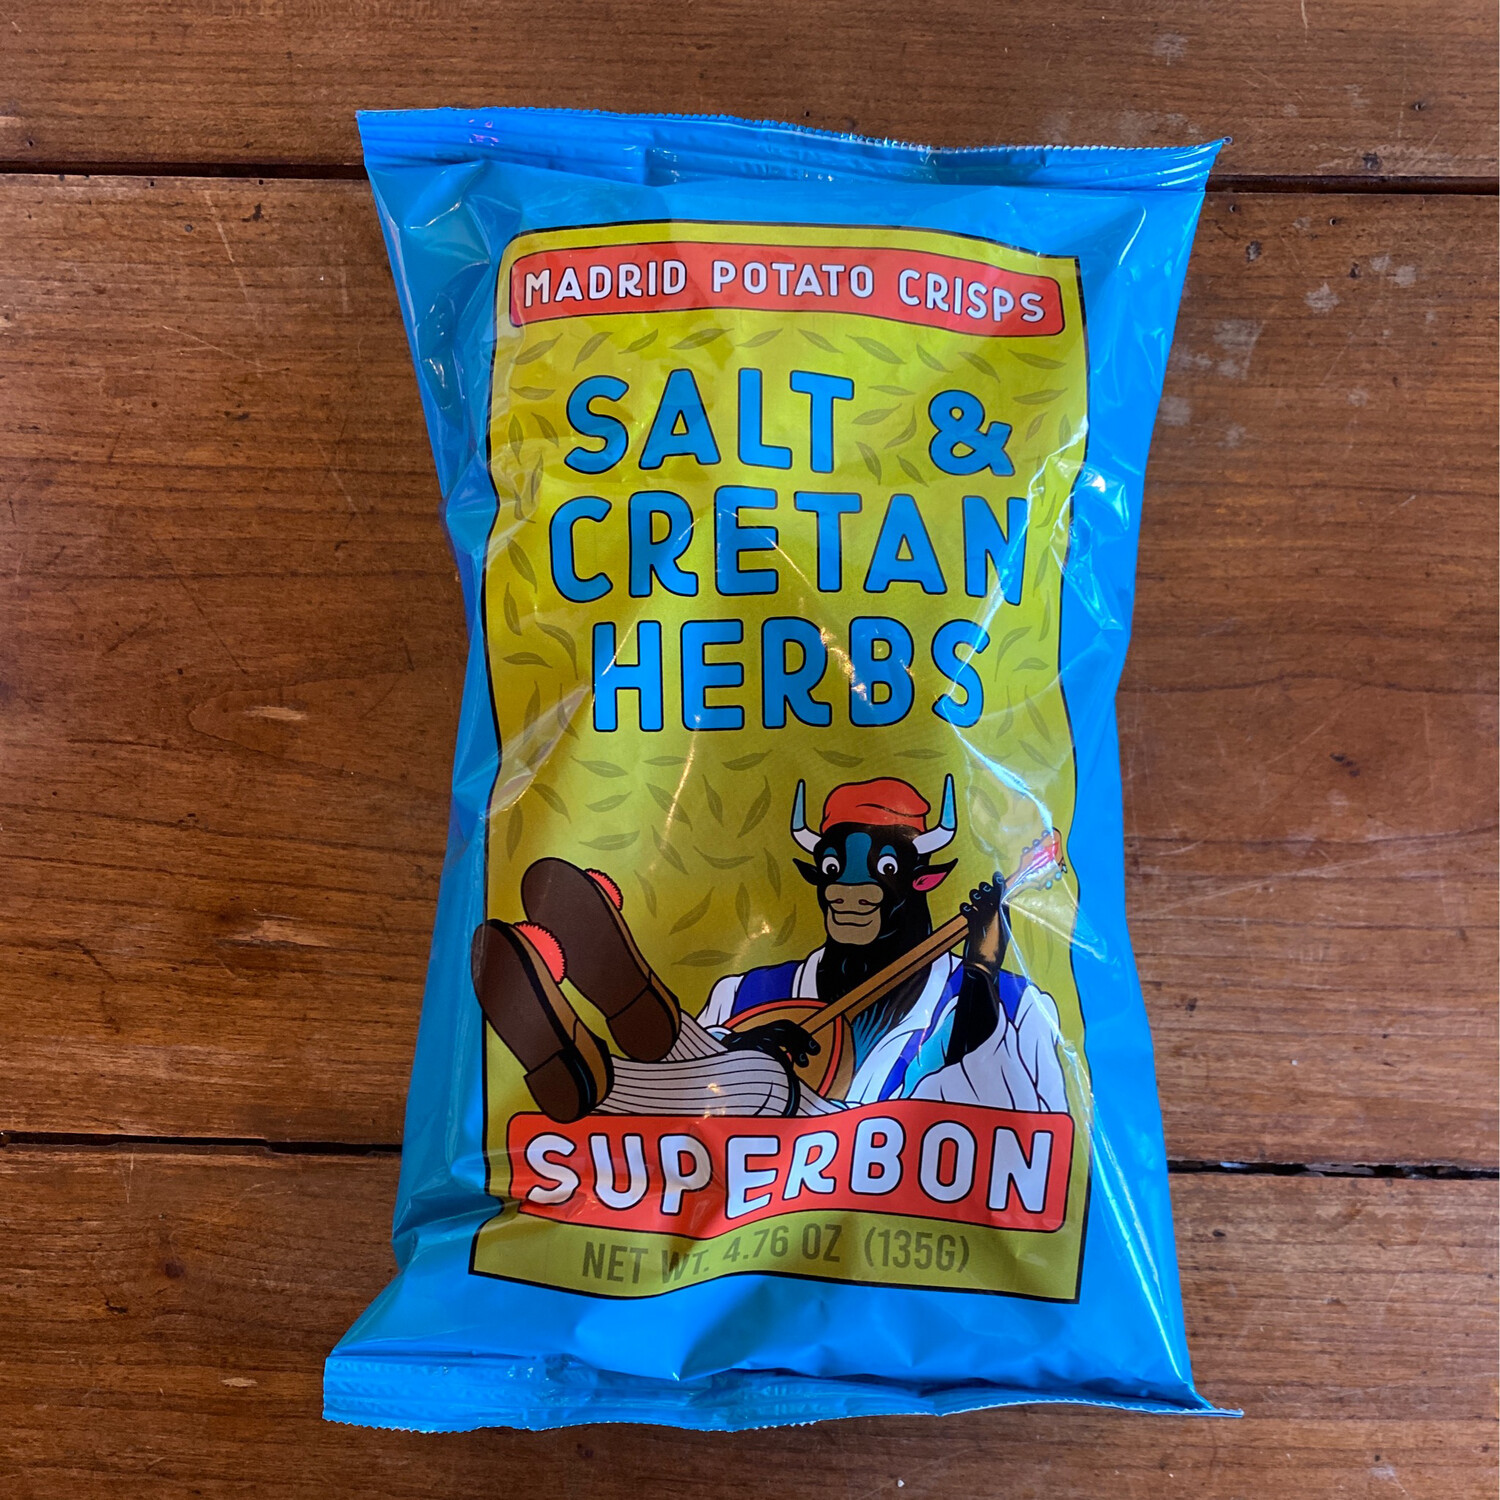 Superbon Cretian Potato Chips